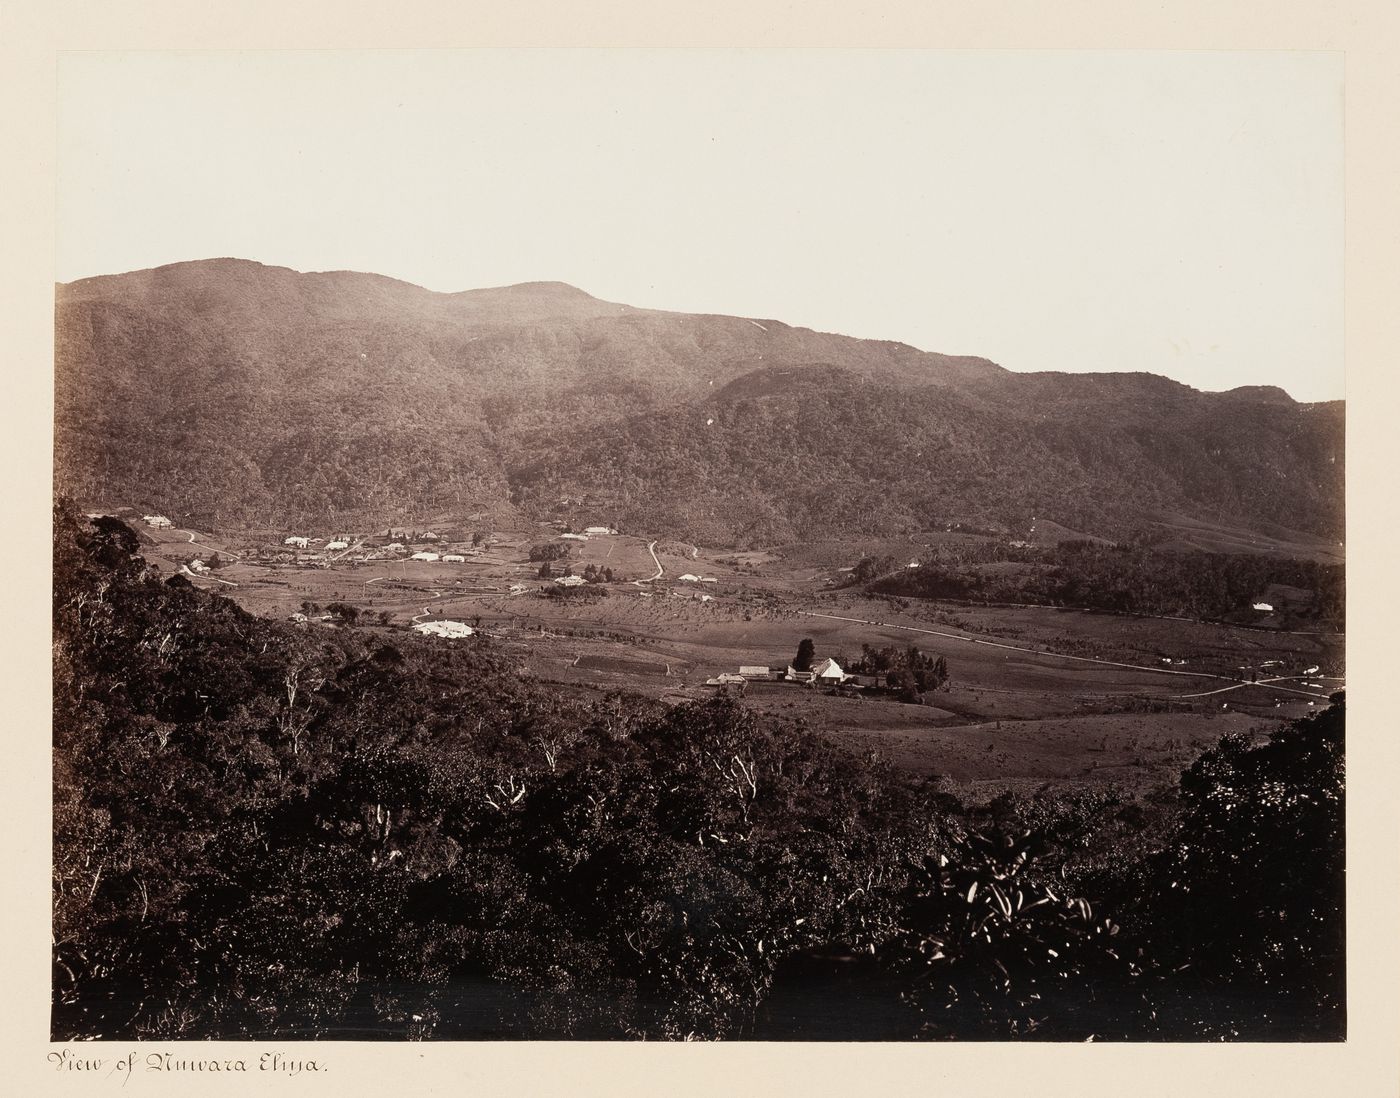 Distant view of Nuwara Eliya with mountains in the background, Ceylon (now Sri Lanka)